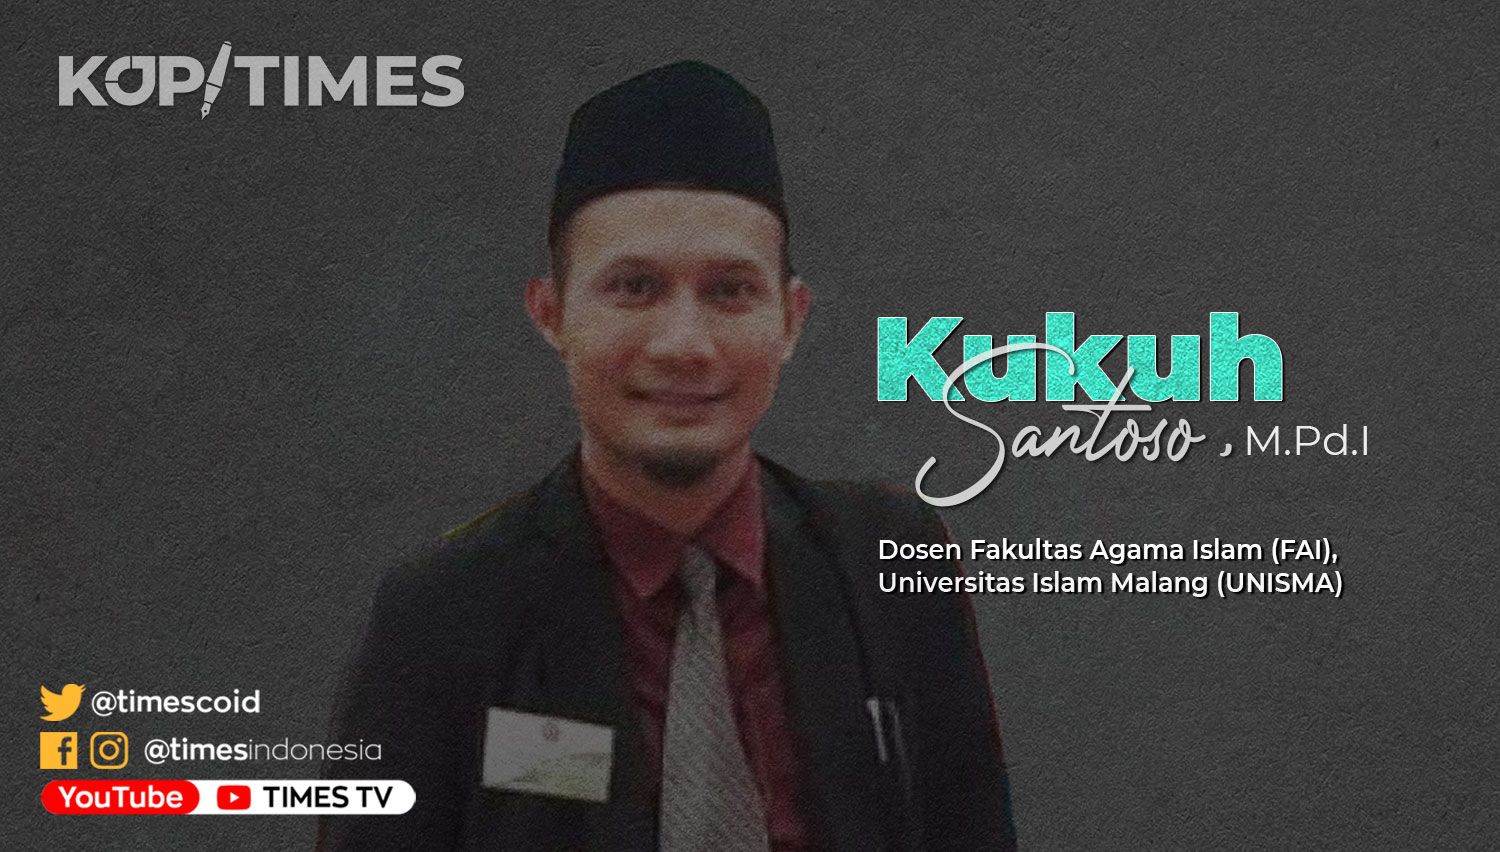 Kukuh Santoso, M.Pd.I, Dosen Fakultas Agama Islam (FAI) Universitas Islam Malang (UNISMA).